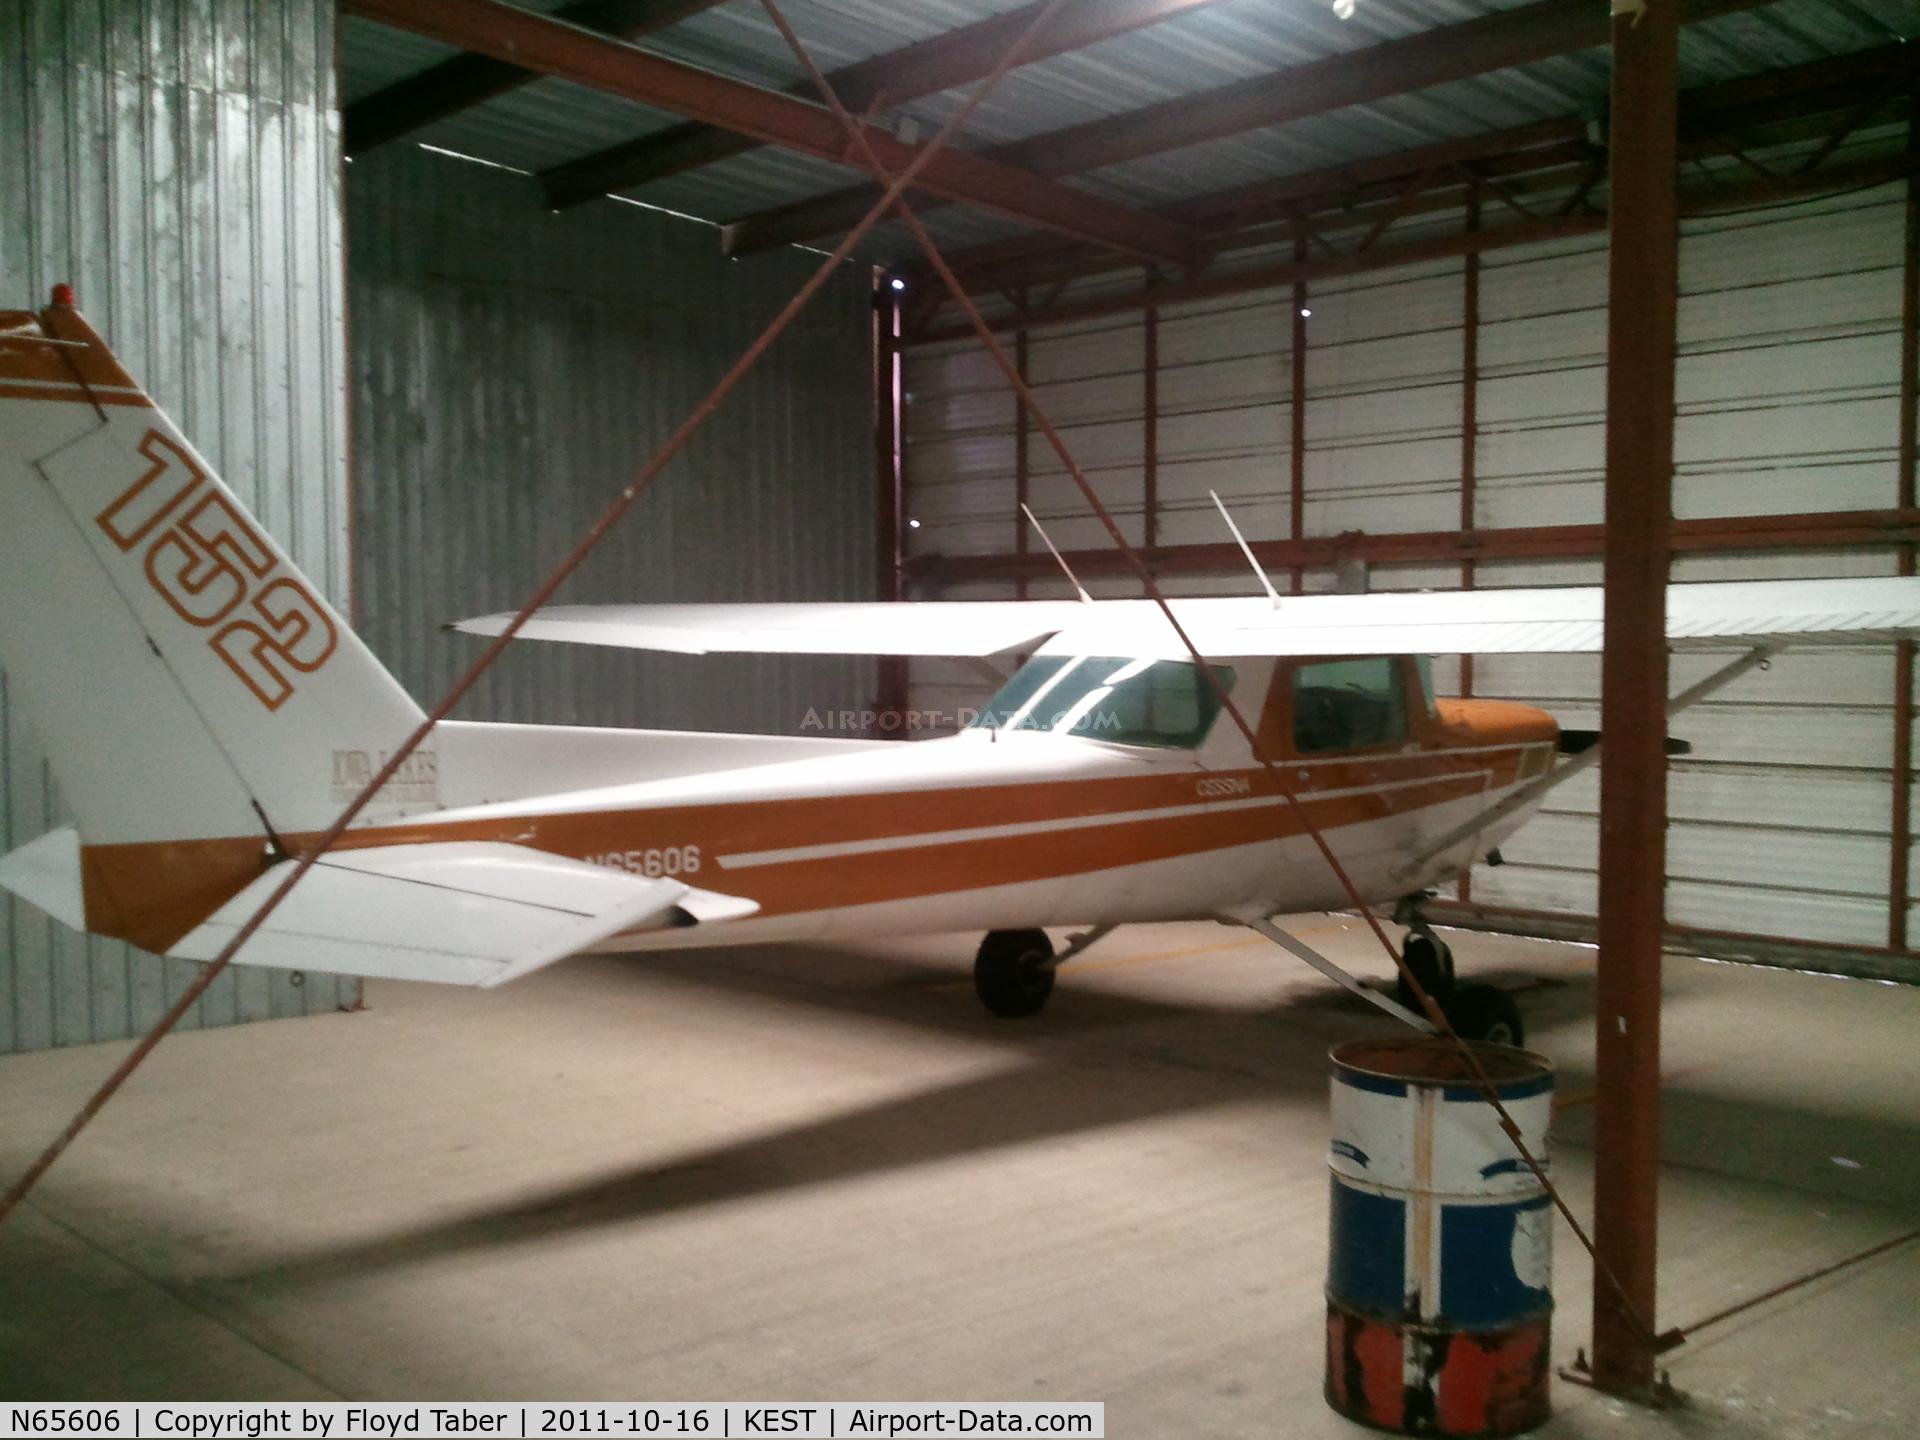 N65606, 1978 Cessna 152 C/N 15281646, in the hangar at KEST